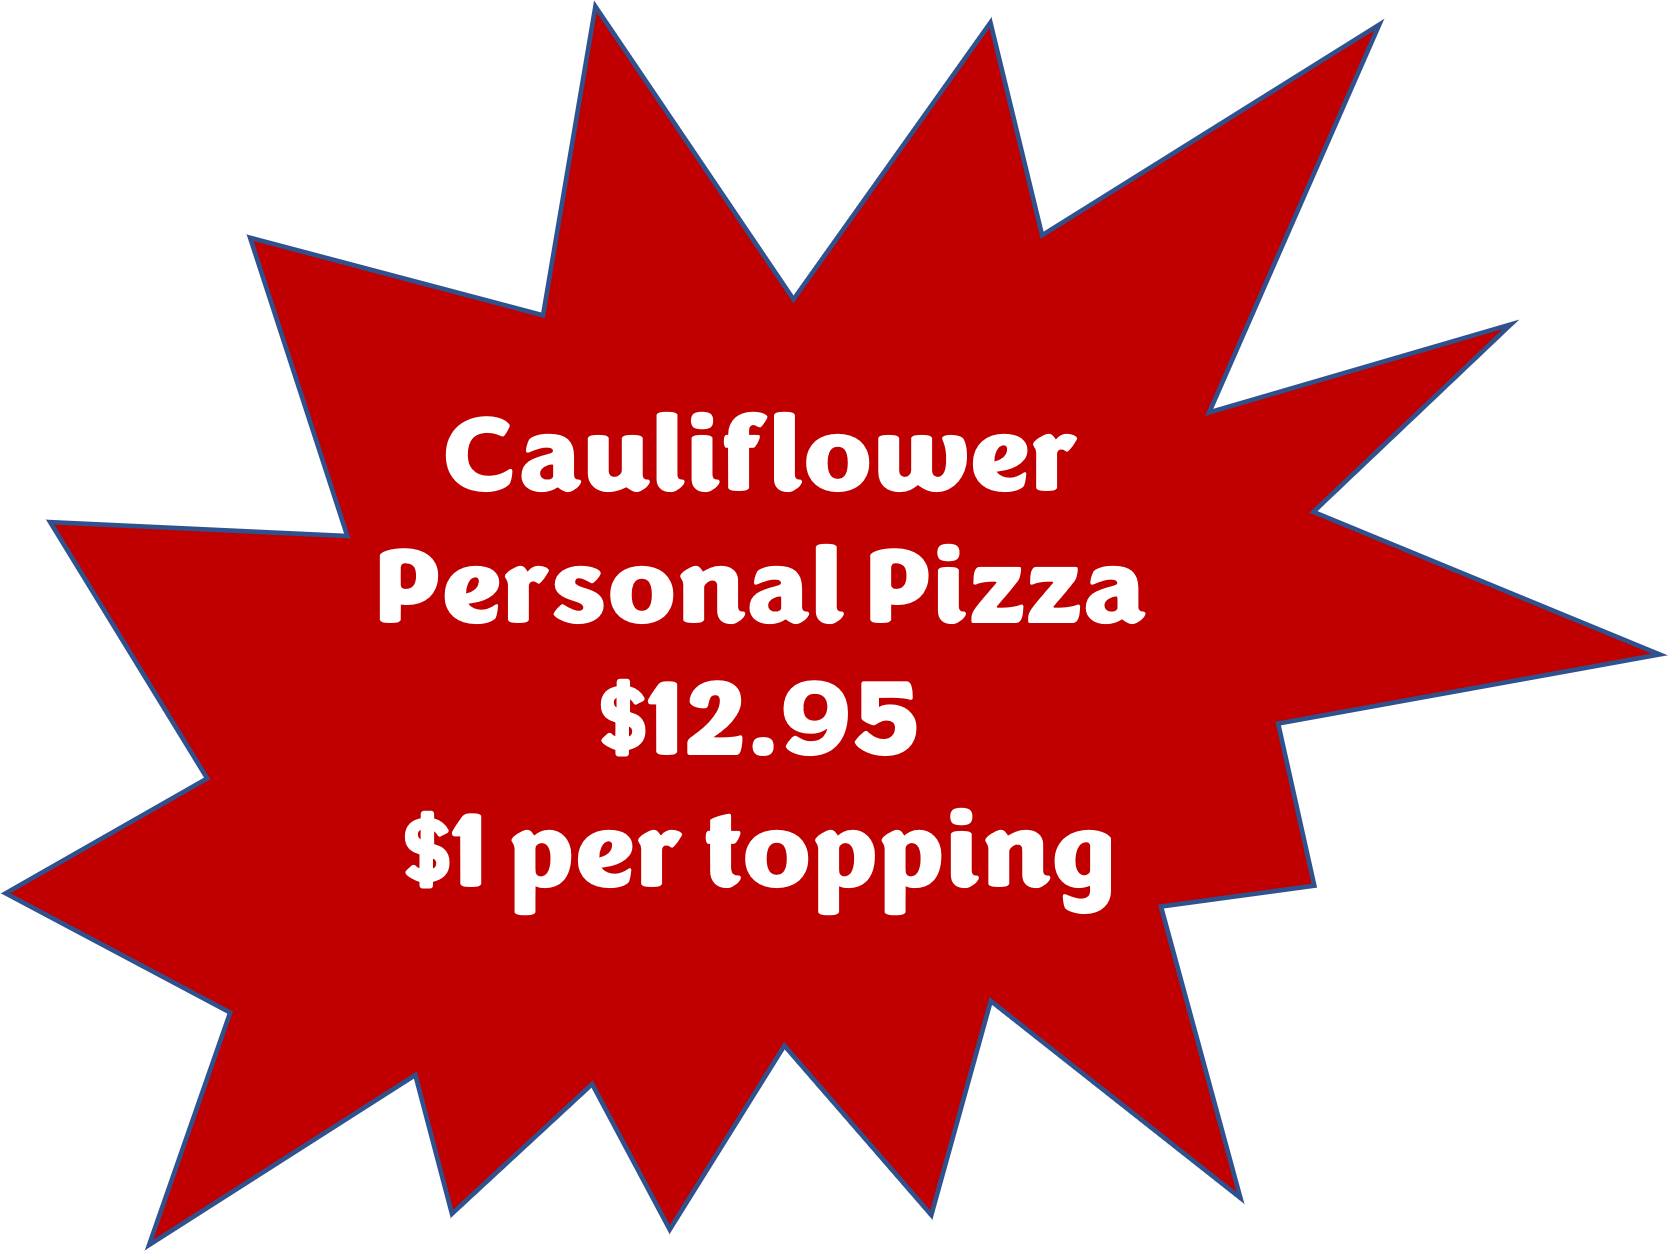 Cauliflower Personal Pizza Burst